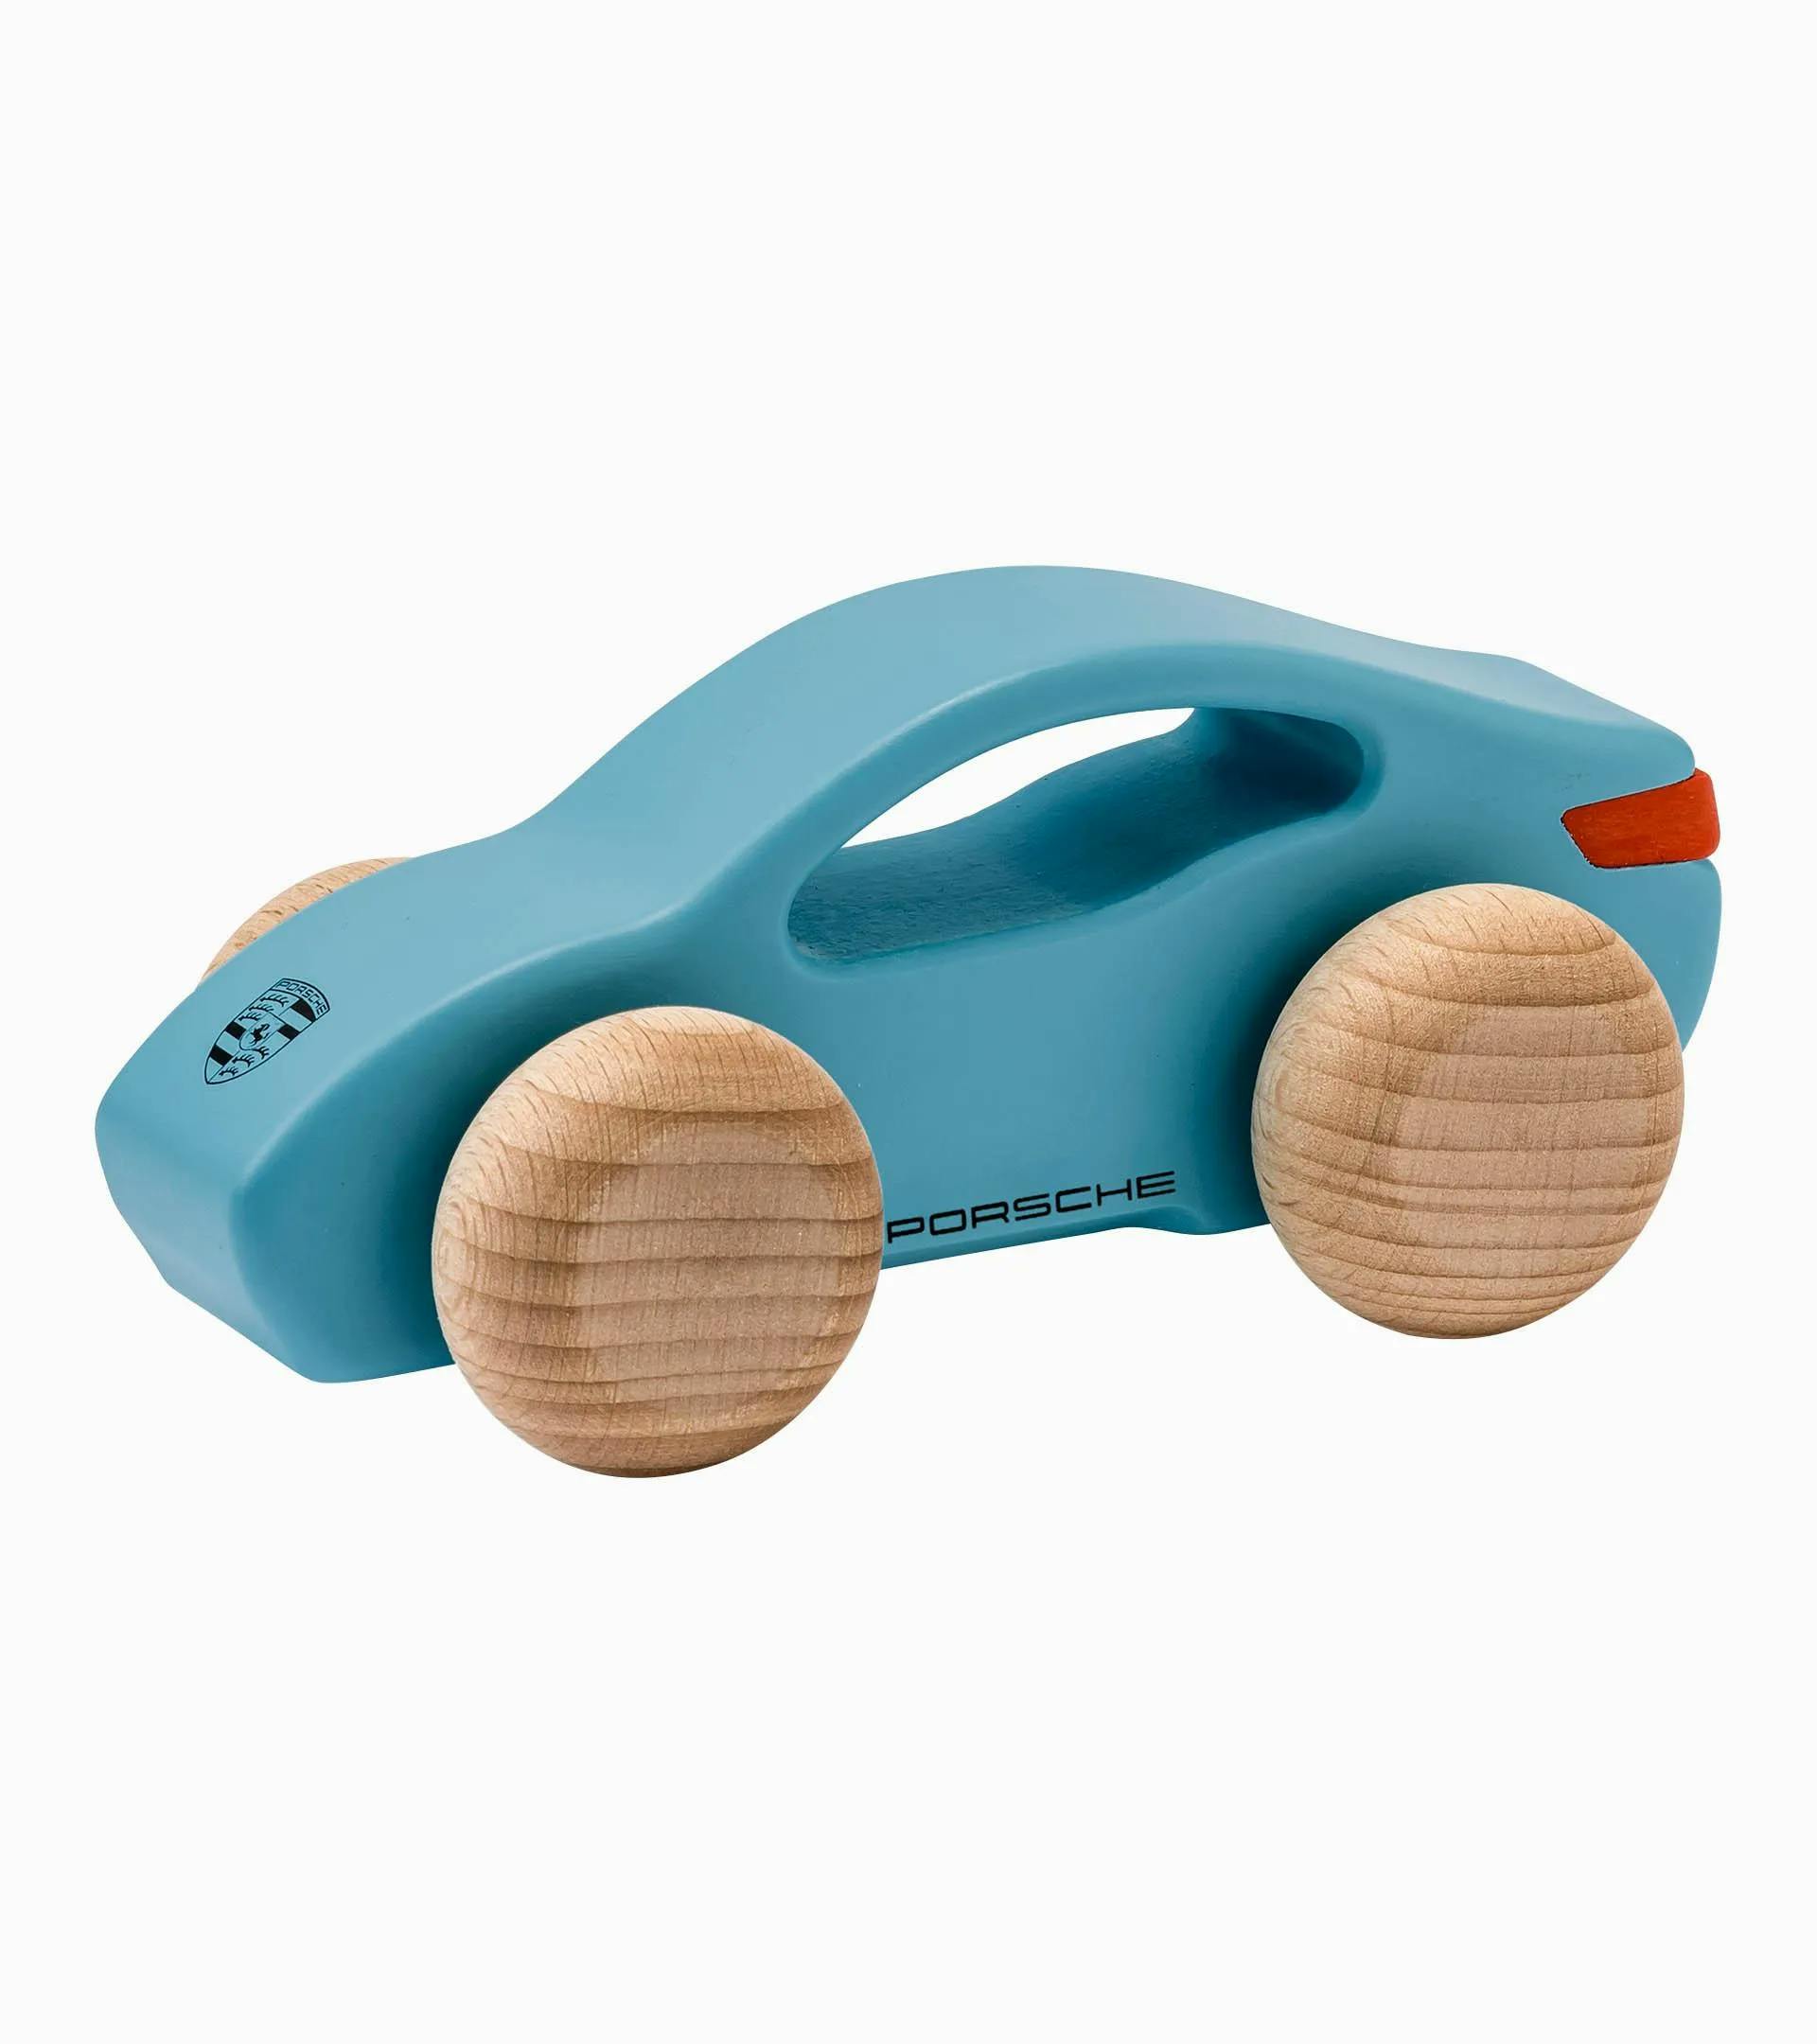 Voiture en bois jouet - Véhicule jouet, petite voitures jouets